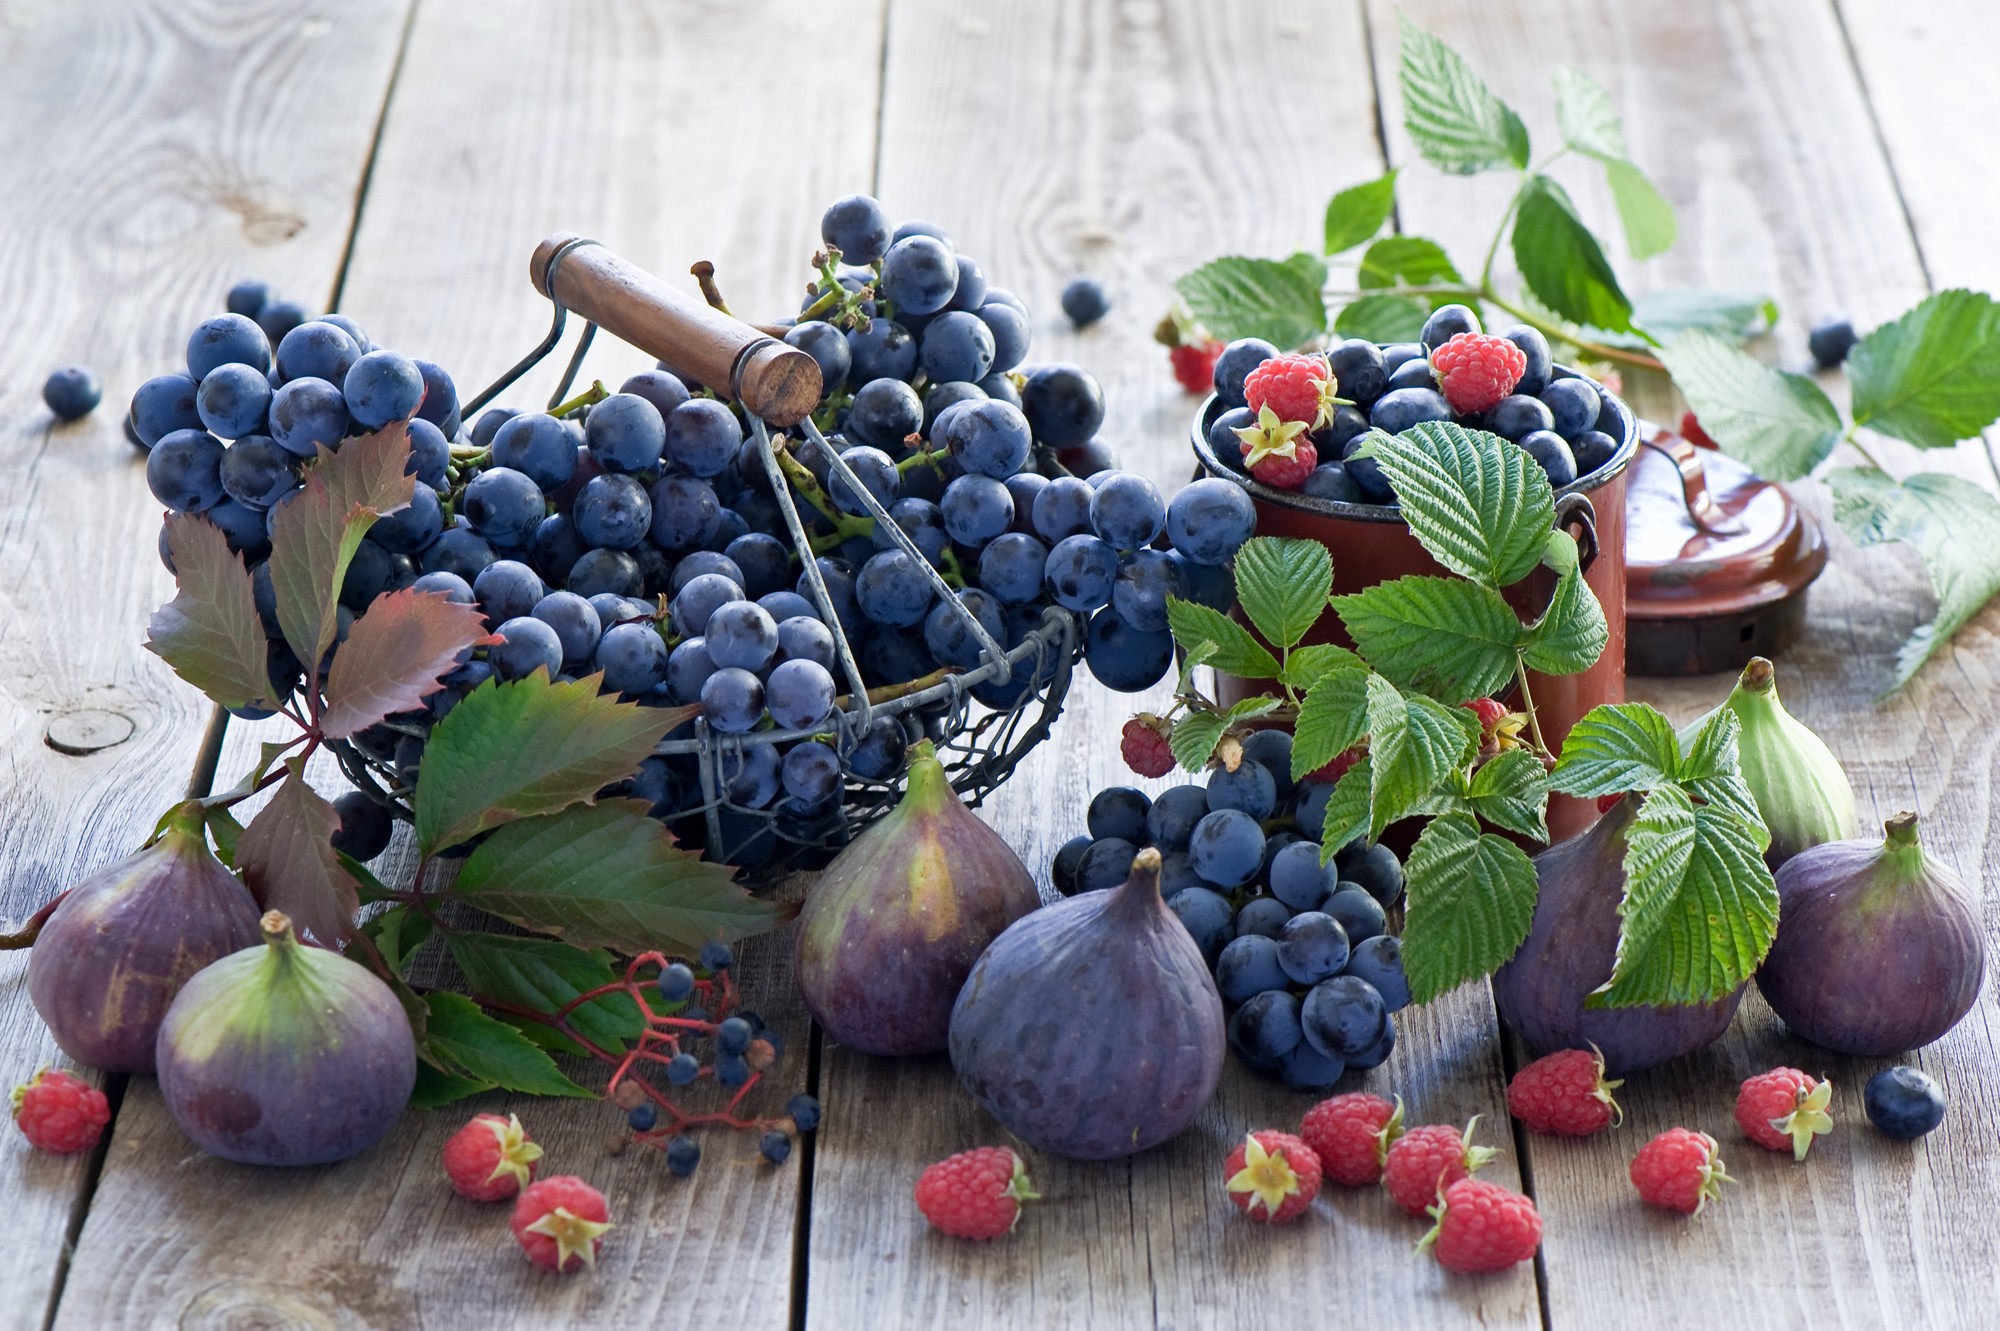 General 2000x1331 food fruit grapes wooden surface baskets berries raspberries Black Grapes